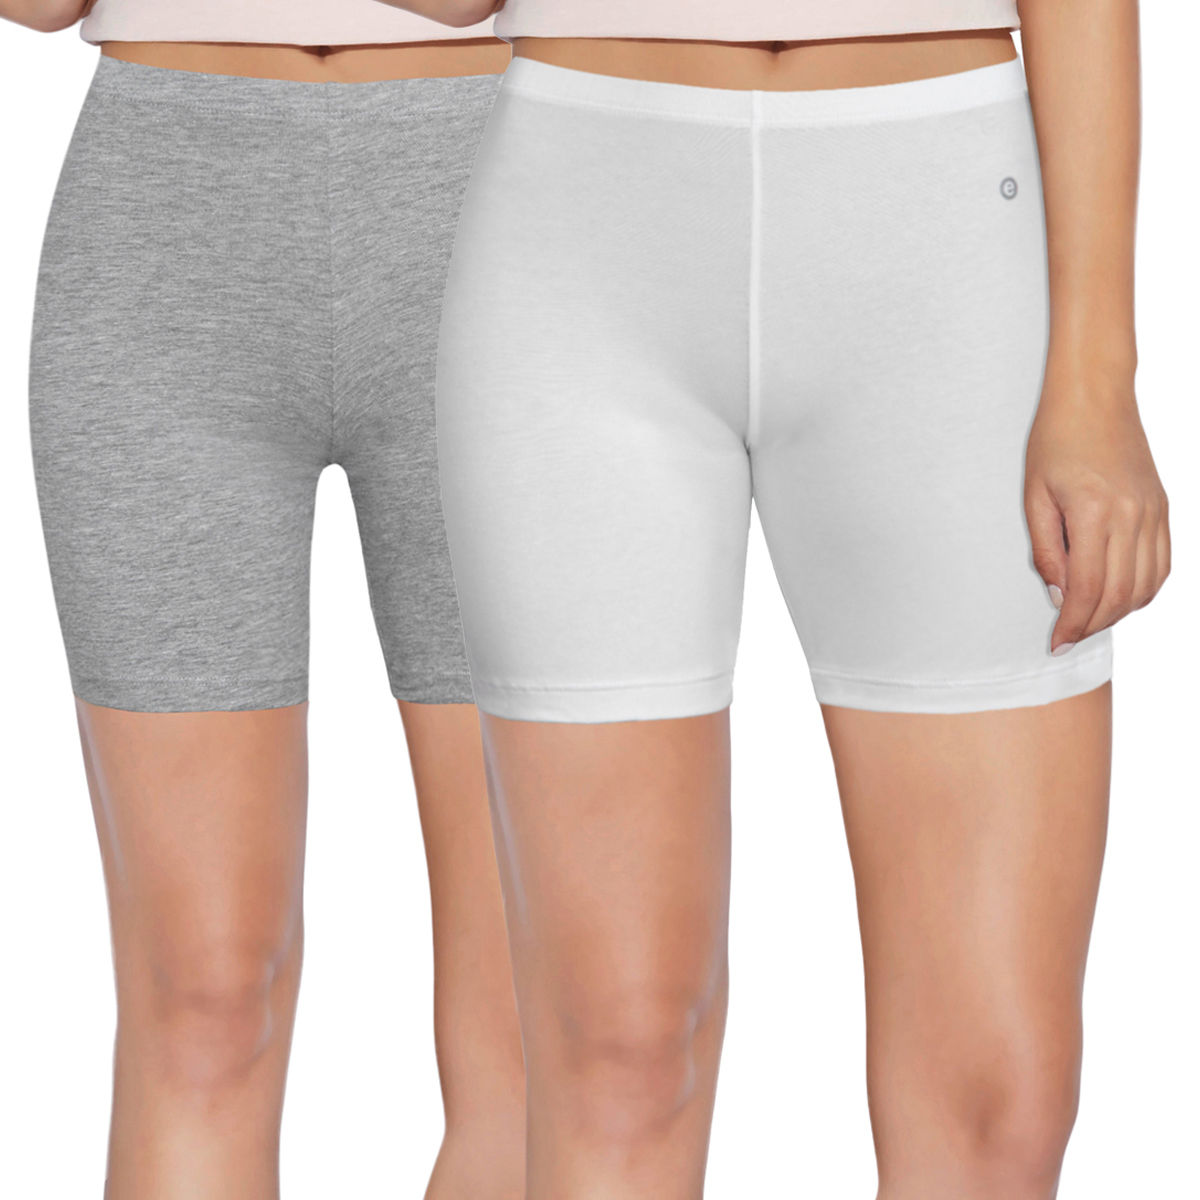 white cotton cycling shorts womens